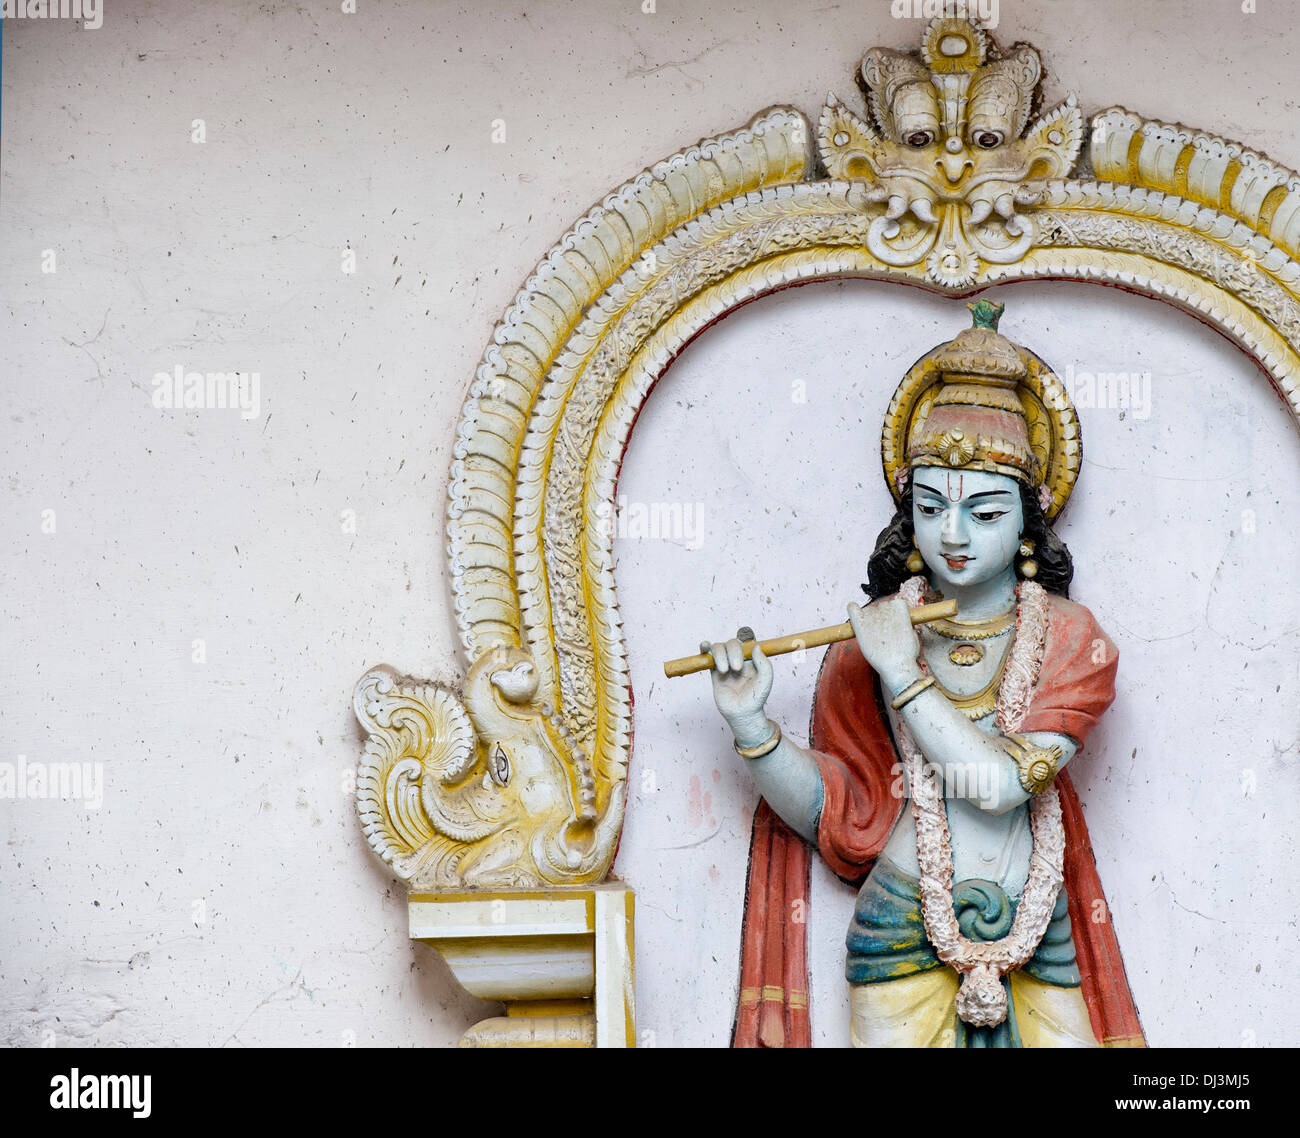 Old worn painted Krishna statue. Worshiped hindu Indian deity. Andhra Pradesh,  India Stock Photo